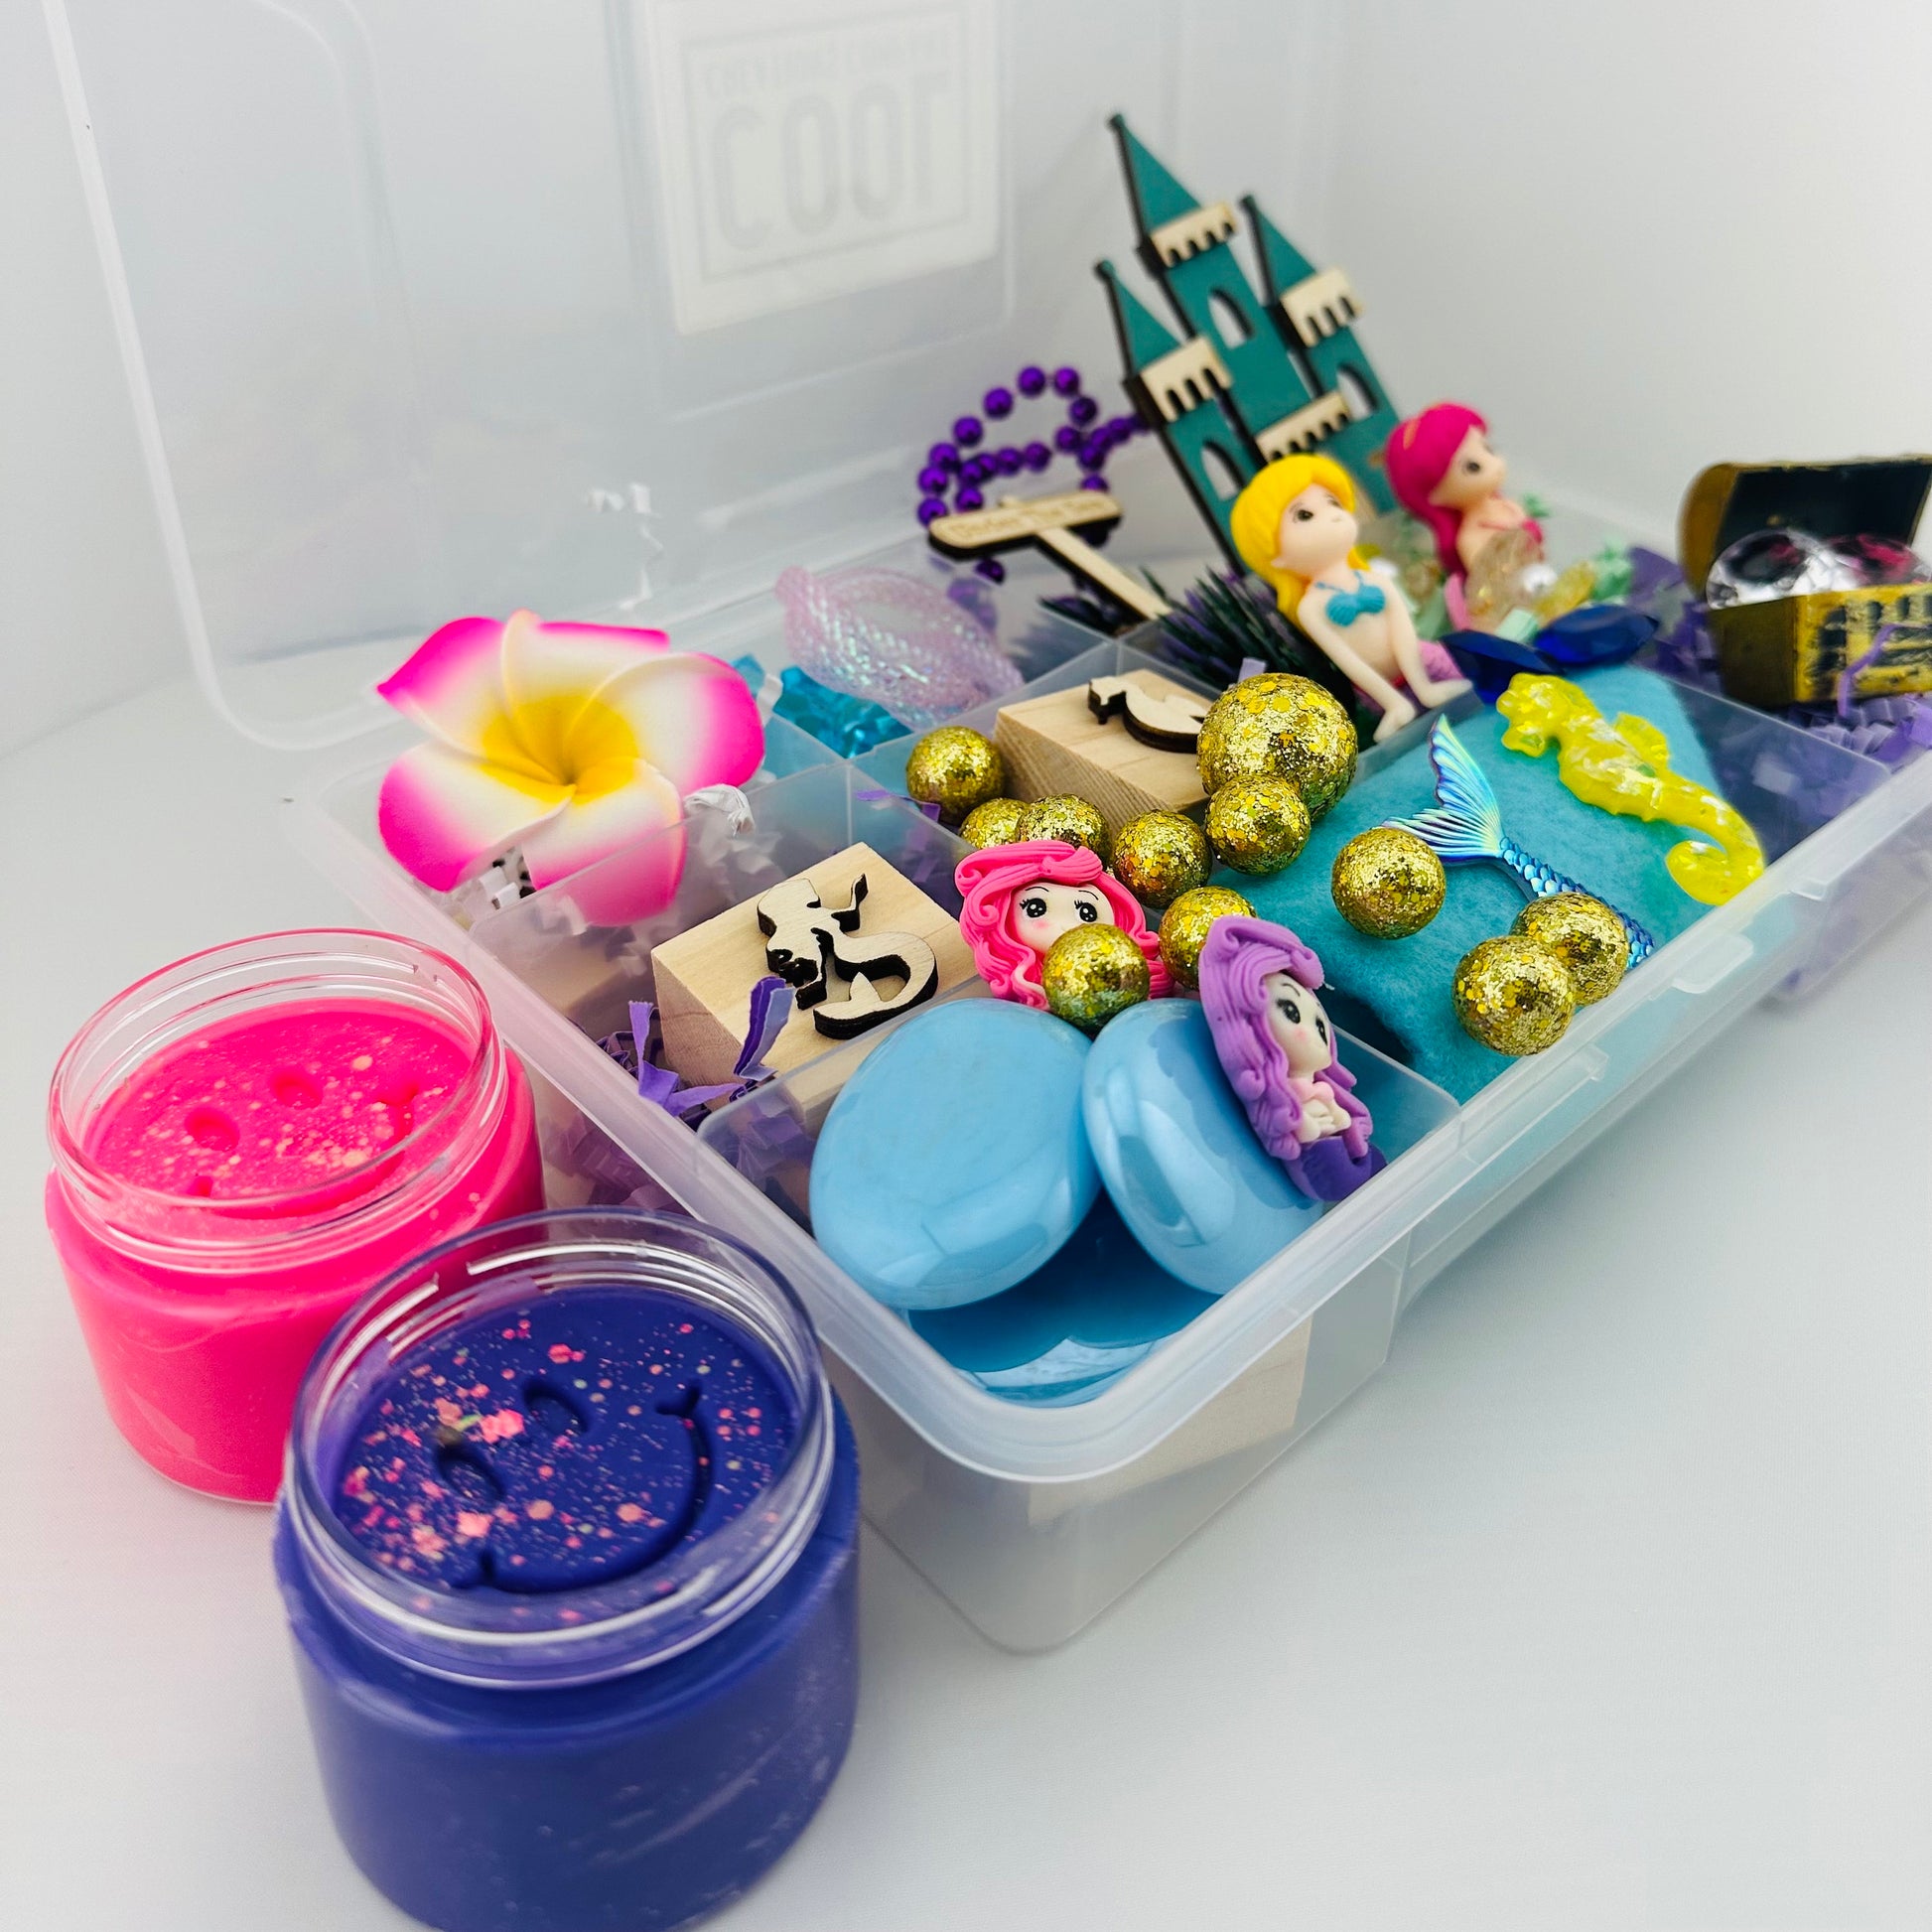 Mermaid Sensory Bin, Play Dough kit, Playdough kit, playdoh kit, play doh kit, Sensory Kit, Kids gift, Imaginary Play, Kids gift, busy box